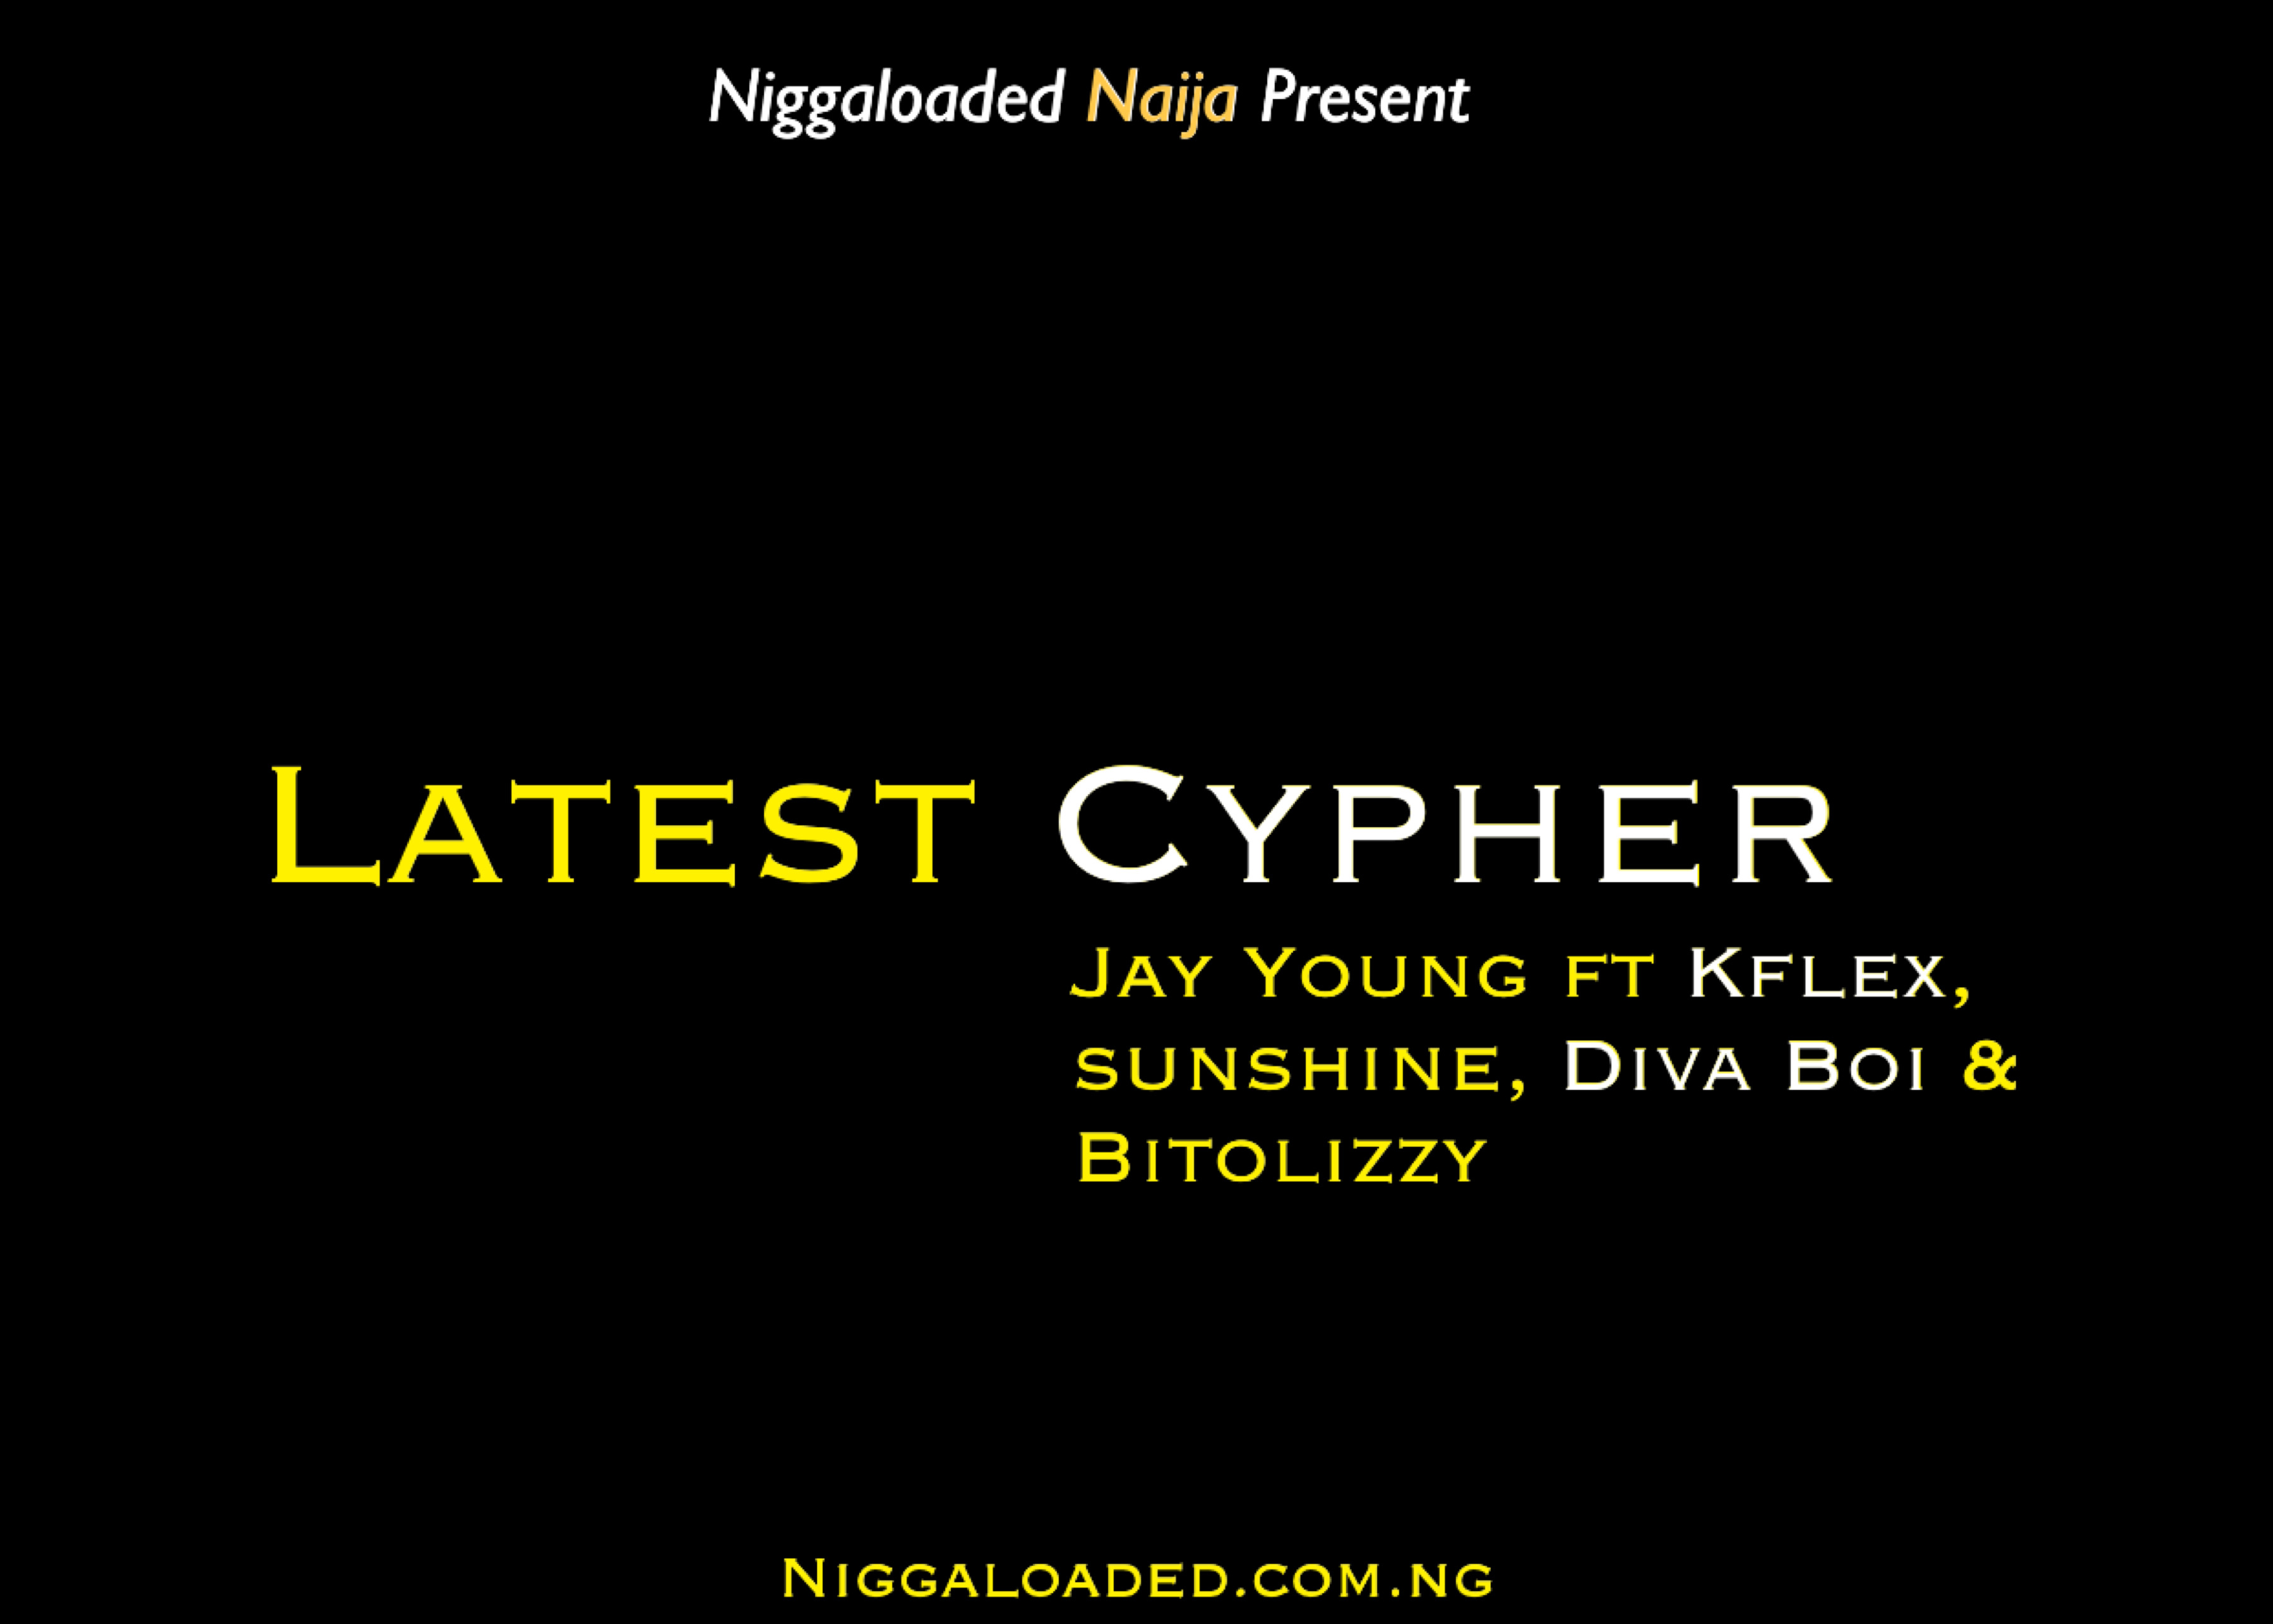 Jay Young Ft K Flex, Sunshine, Diva Boy, Bitolizzy - Latest Cypher (Niggaloaded)